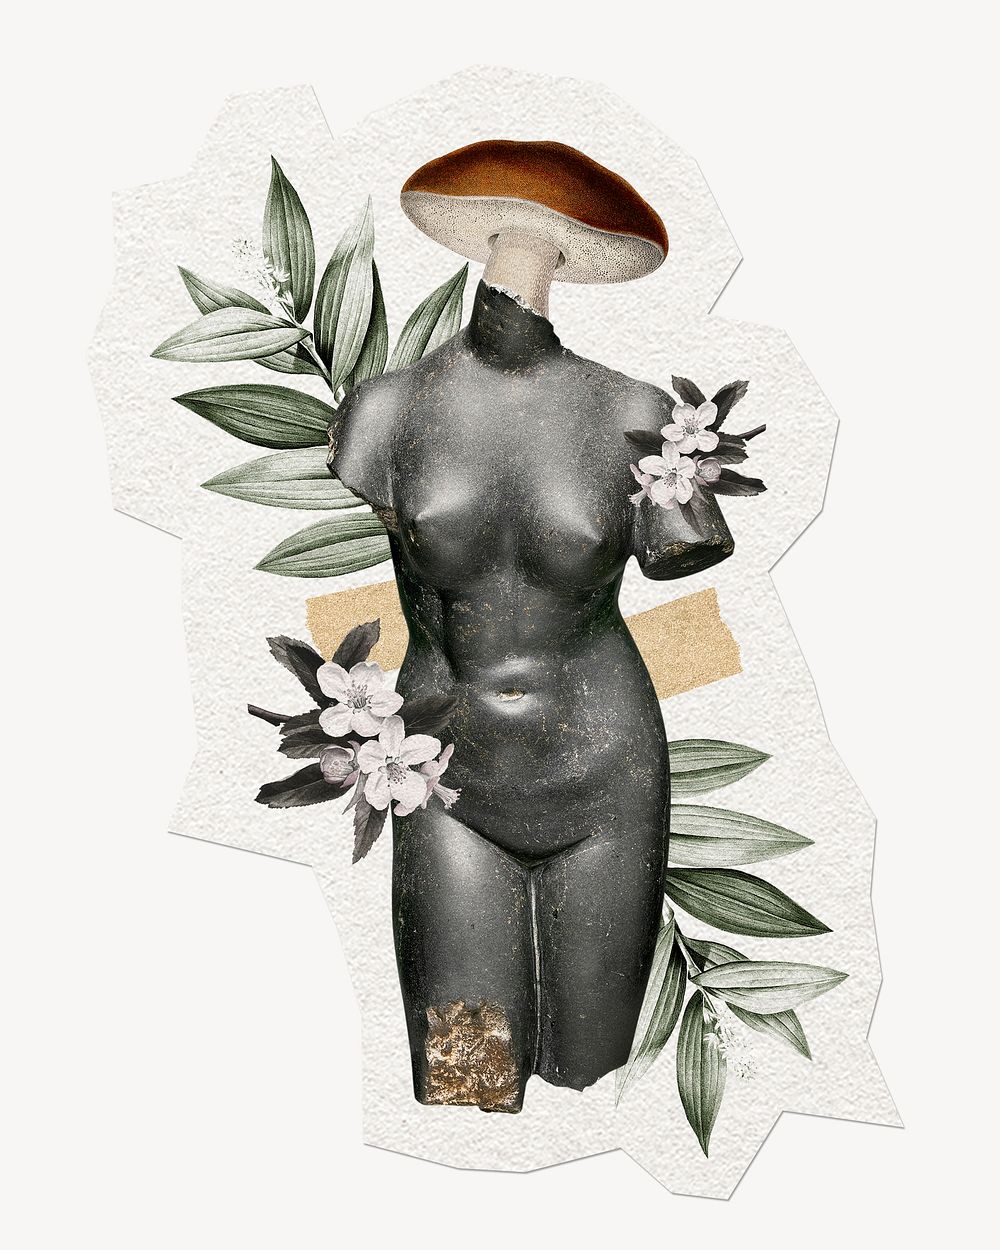 Nude sculpture, botanical illustration mixed media, digital collage art